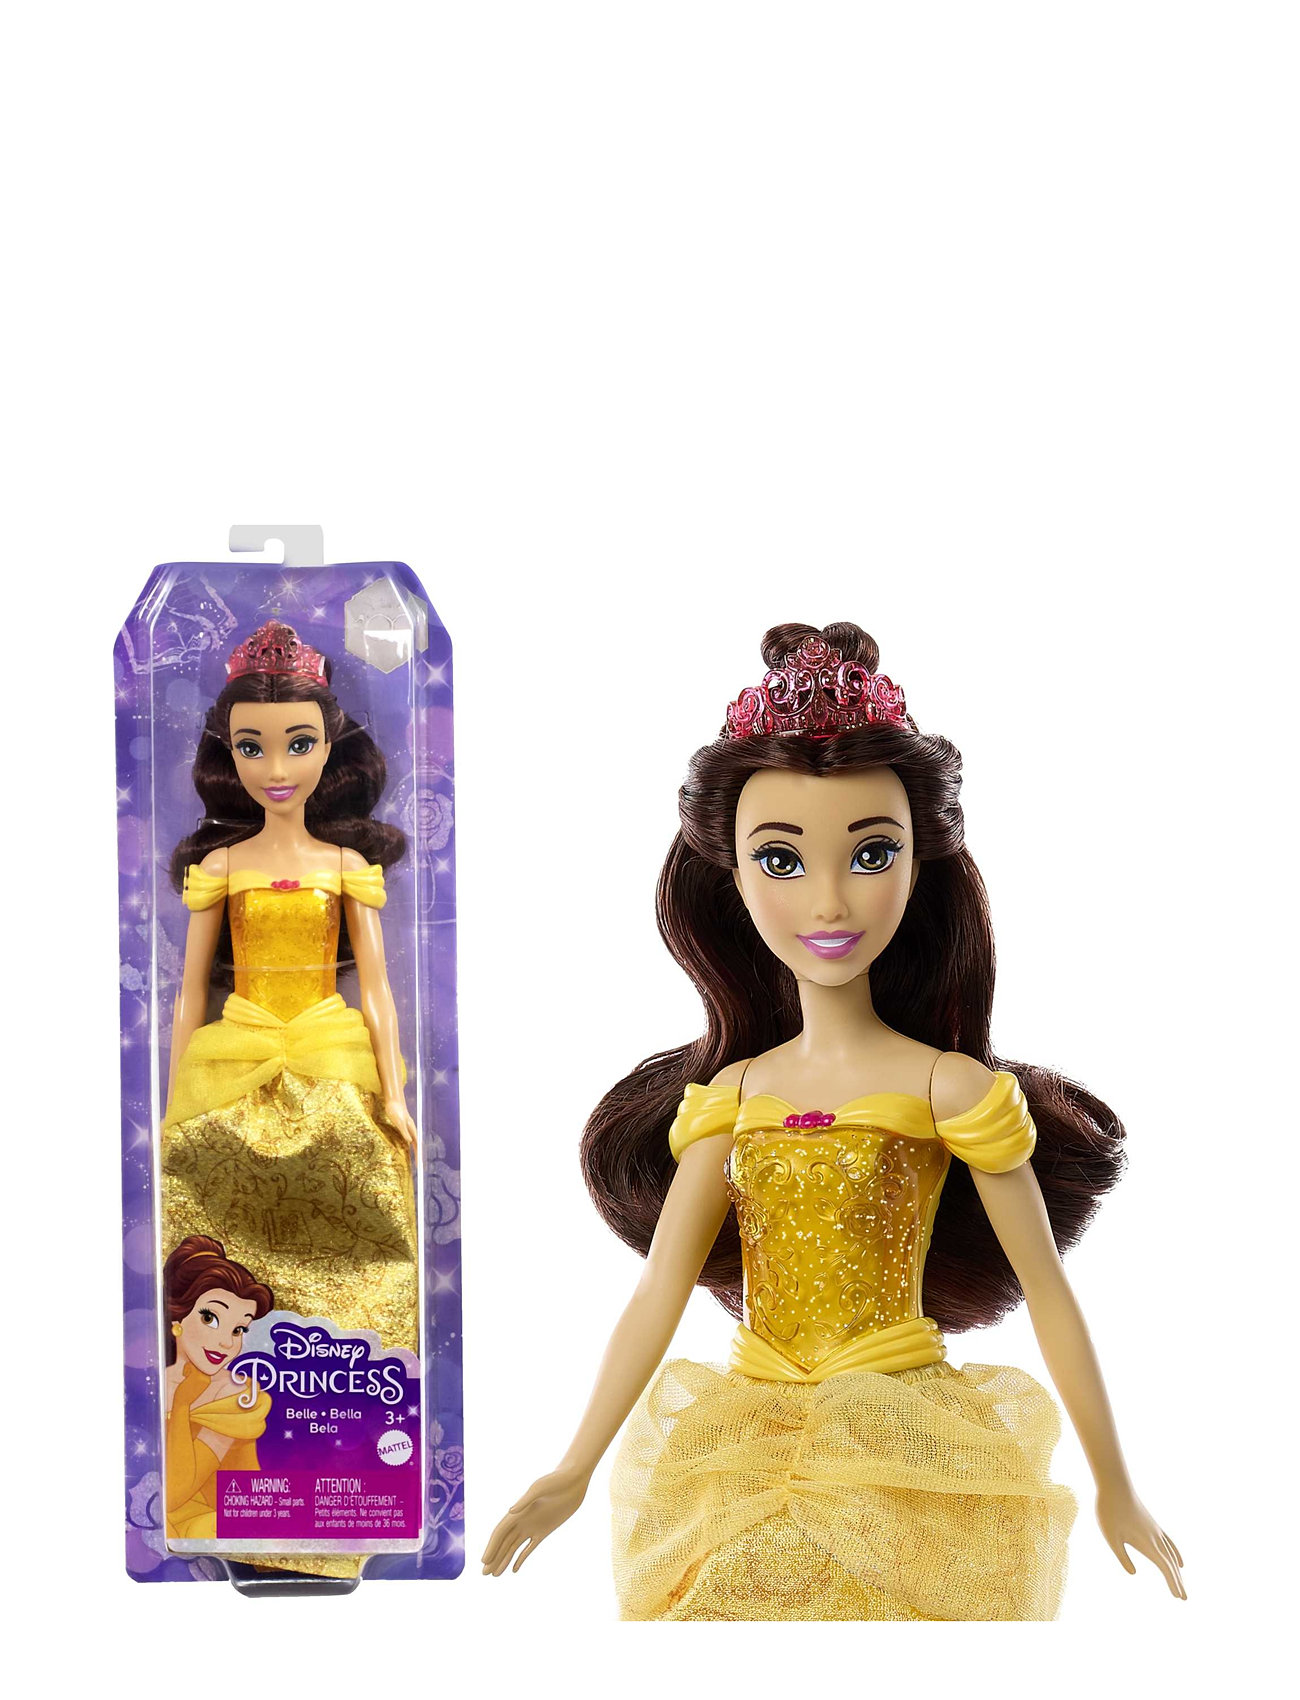 Disney Princess Belle Doll Toys Dolls & Accessories Dolls Multi/patterned Disney Princess